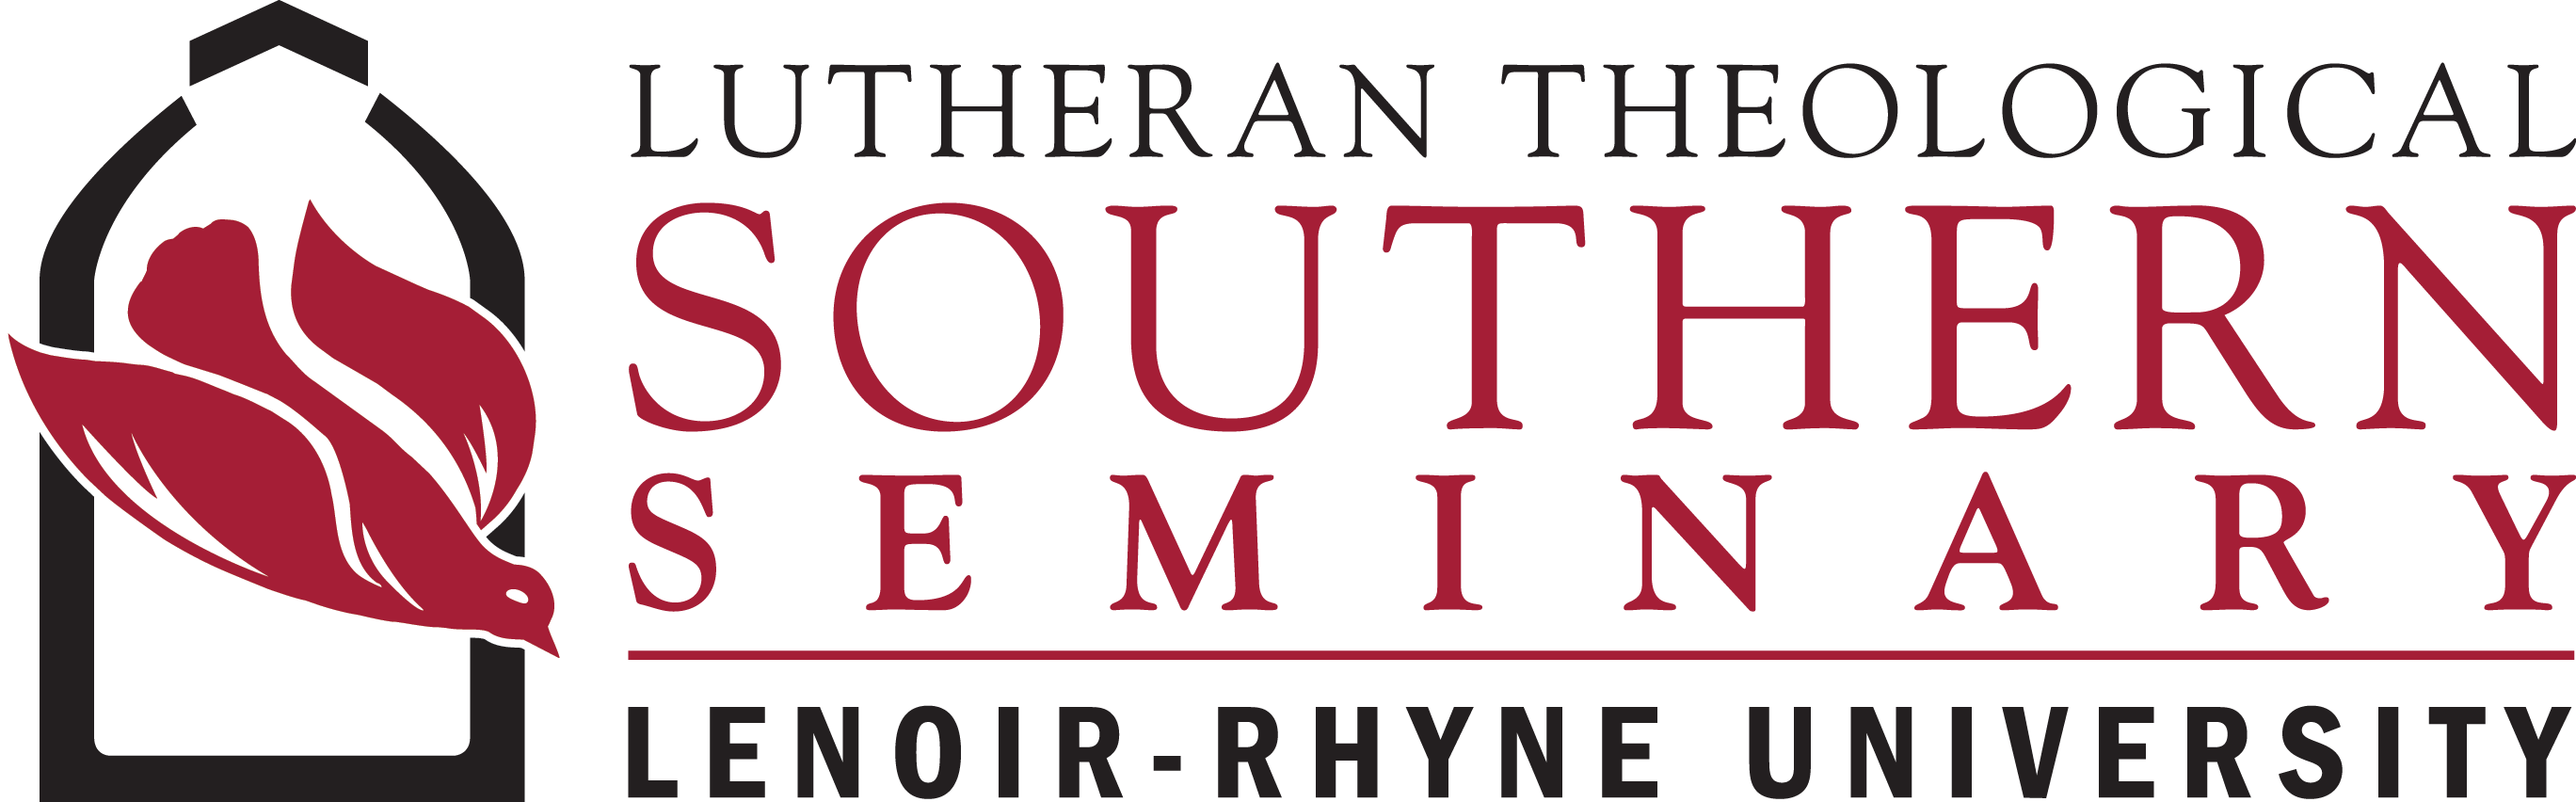 Lutheran Theological Southern Seminary logo